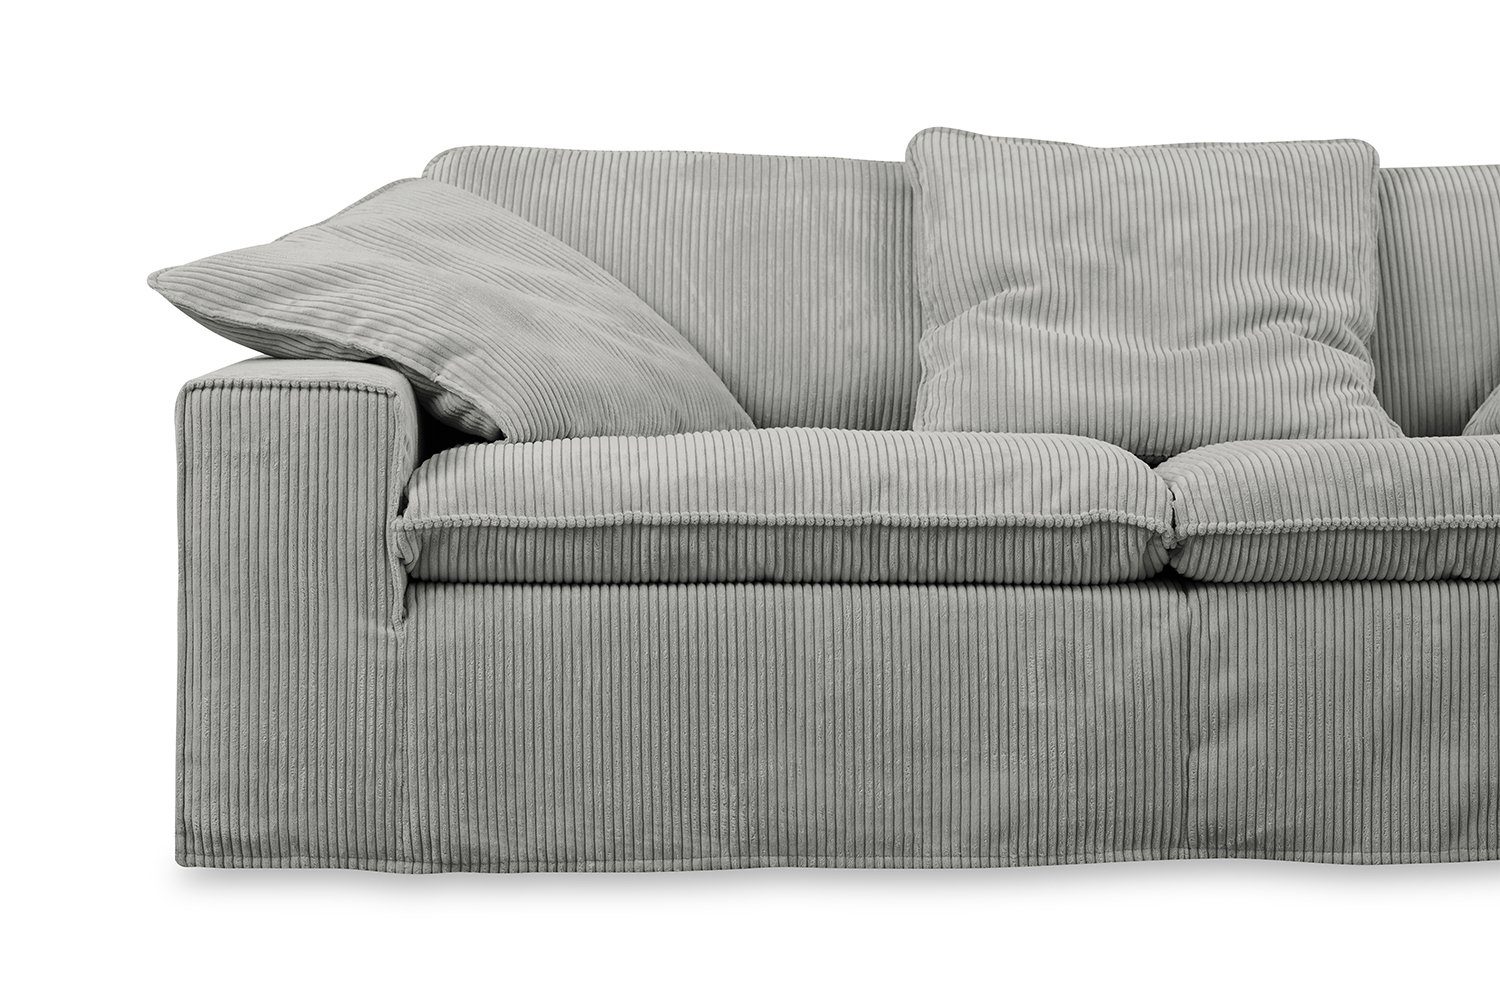 KAWOLA 3-Sitzer NETTA, abziehbar, dunkelgrau und Breiten versch. Farben Cord Sofa versch. dunkelgrau Bezug 